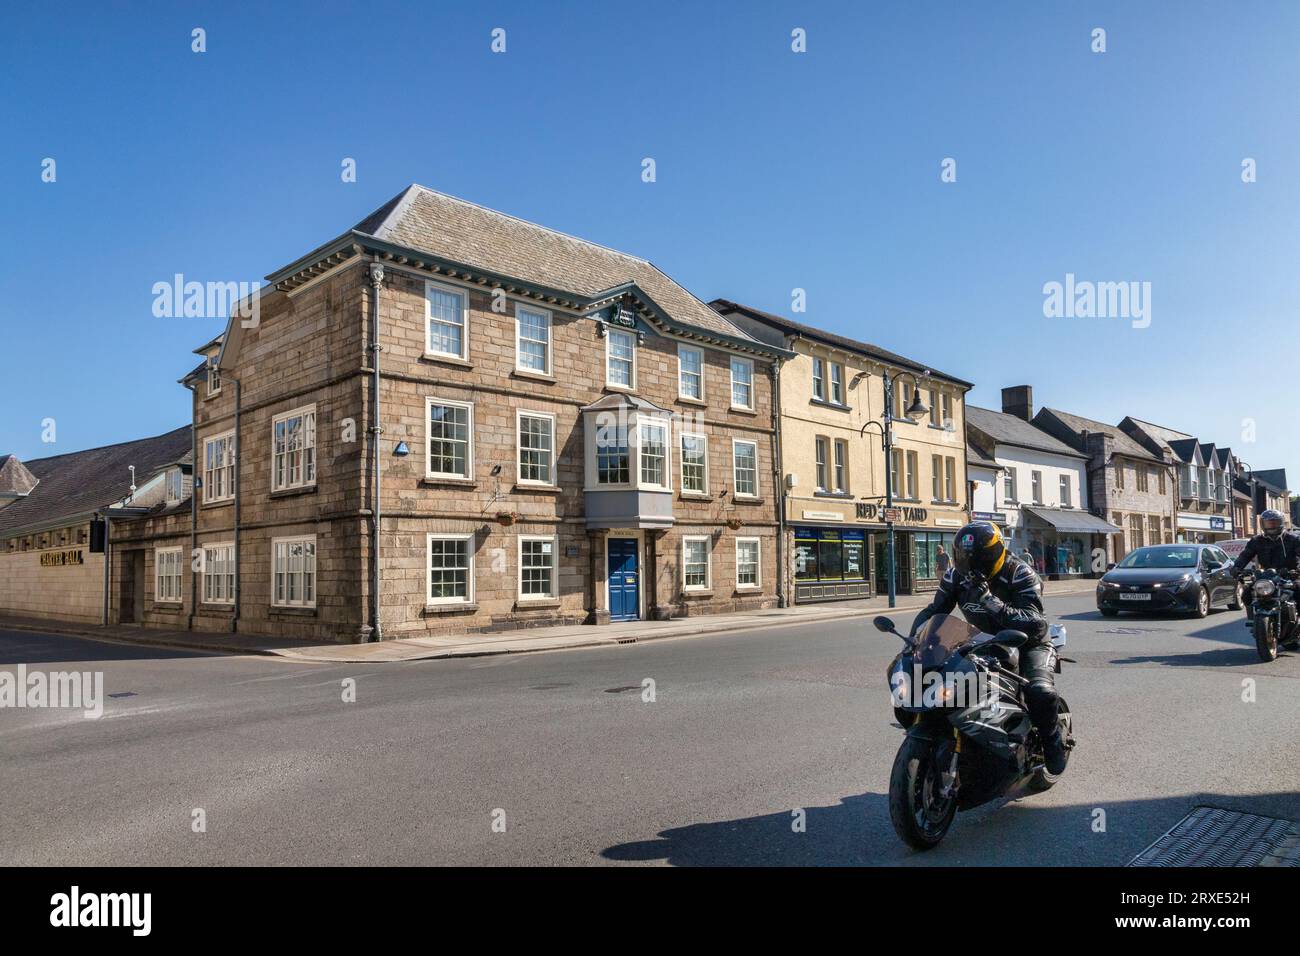 3 June 2023: Okehampton, Devon, UK - Town Hall and heritage buildings in Okehampton High Street, also bikers riding through. Stock Photo